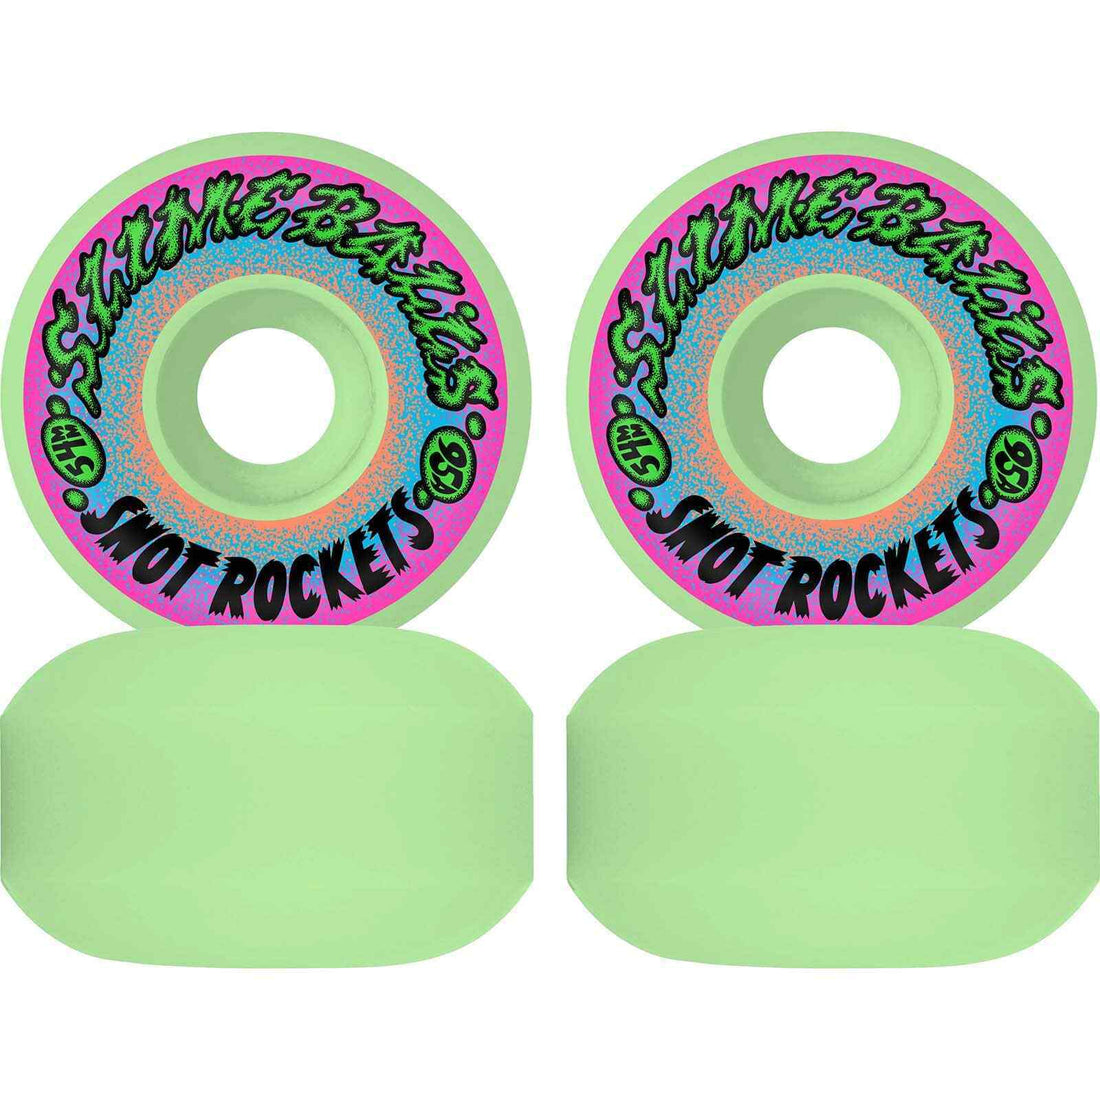 Santa Cruz Slime Balls Snot Rockets Skateboard Wheels